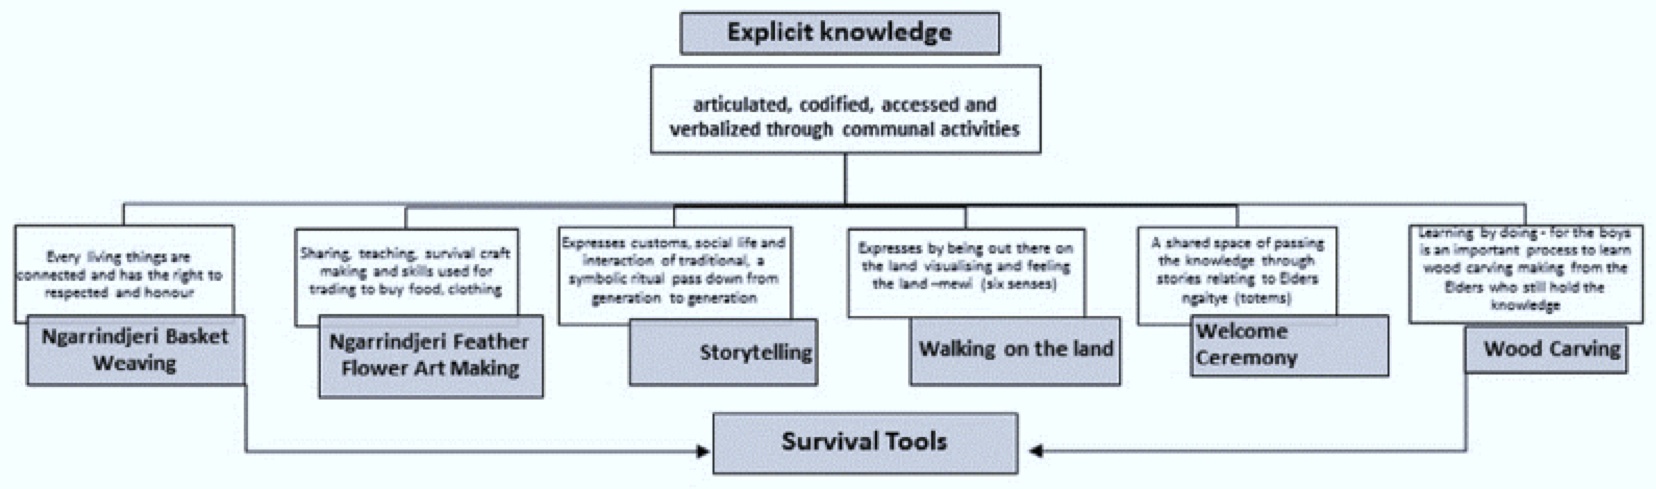 Explicit – communal activities (survival tools)